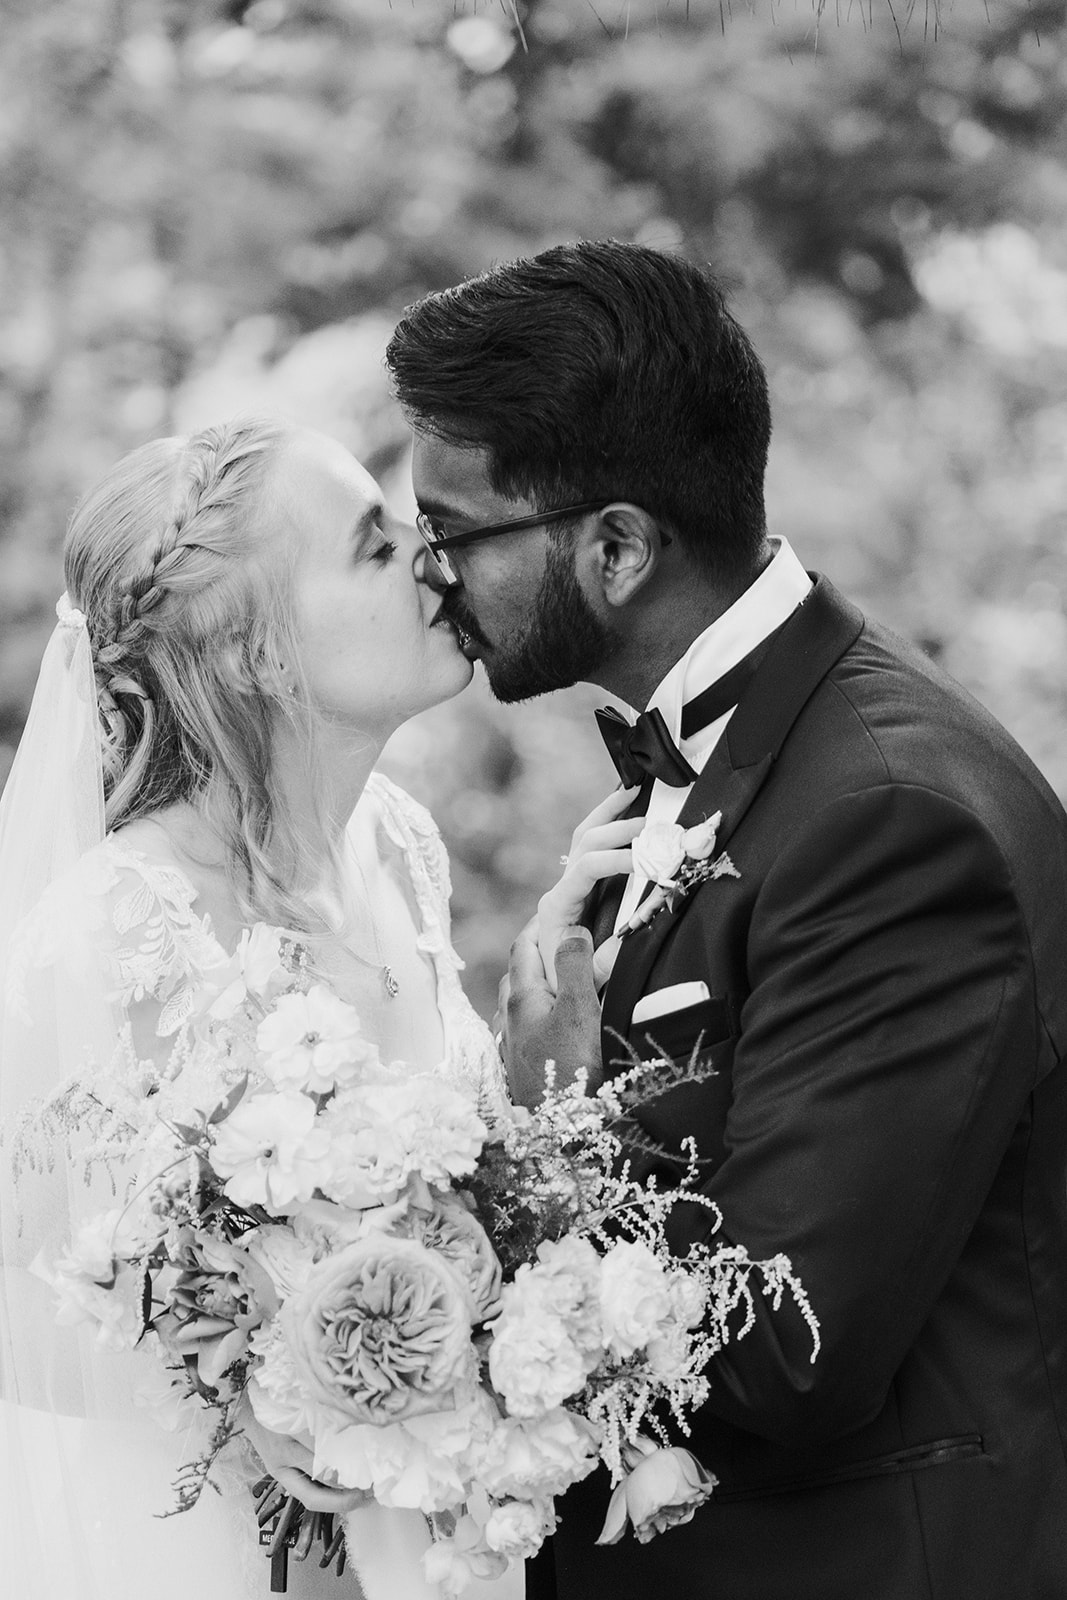 Perth wedding photographer, natural, romantic